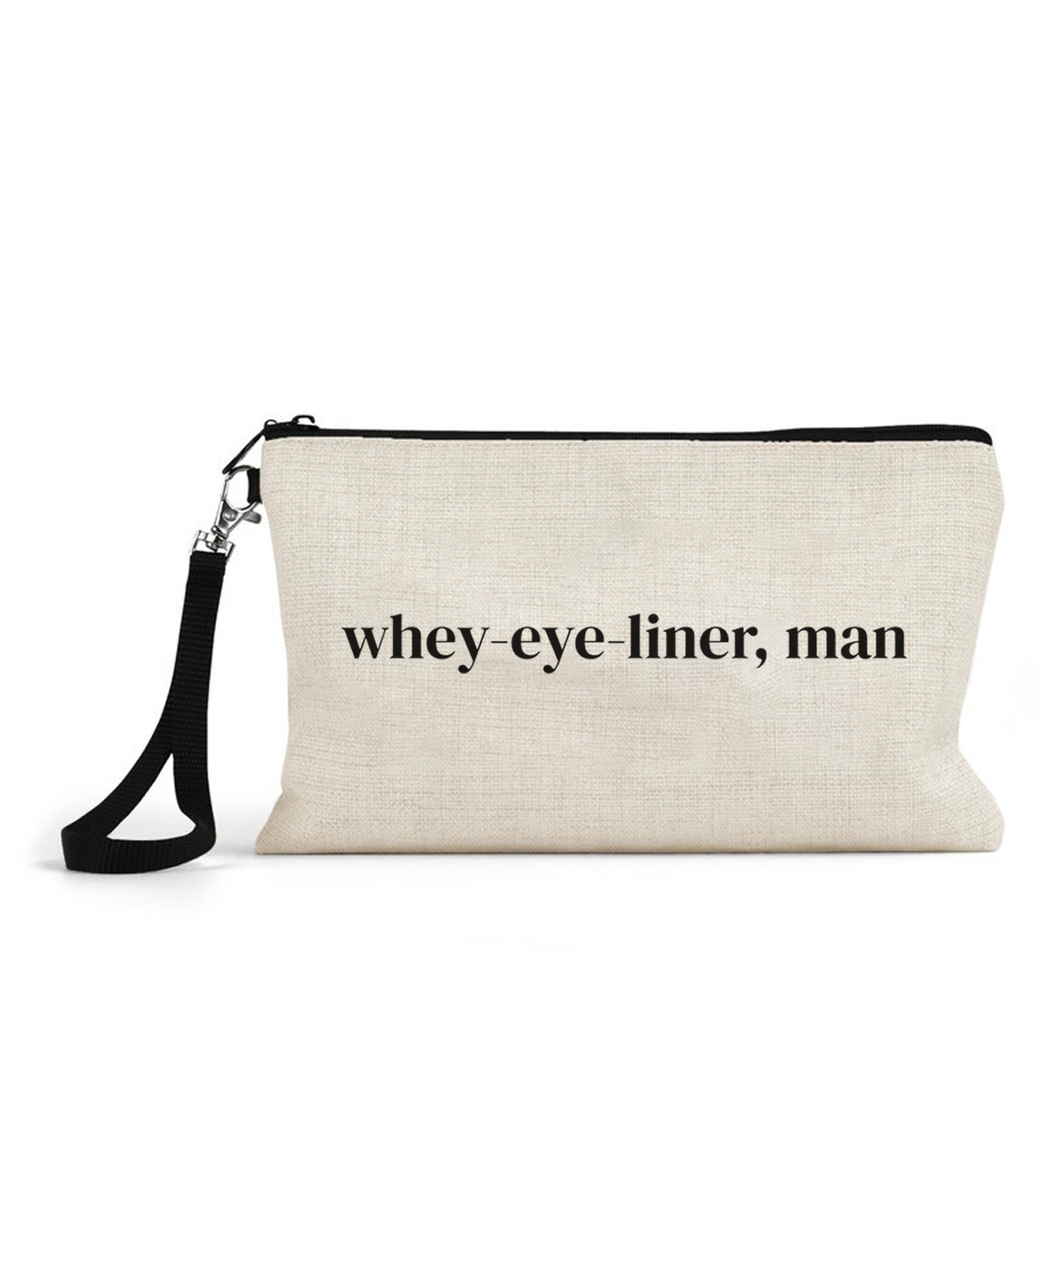 Whey-eye-liner, man! - Cosmetic Bag